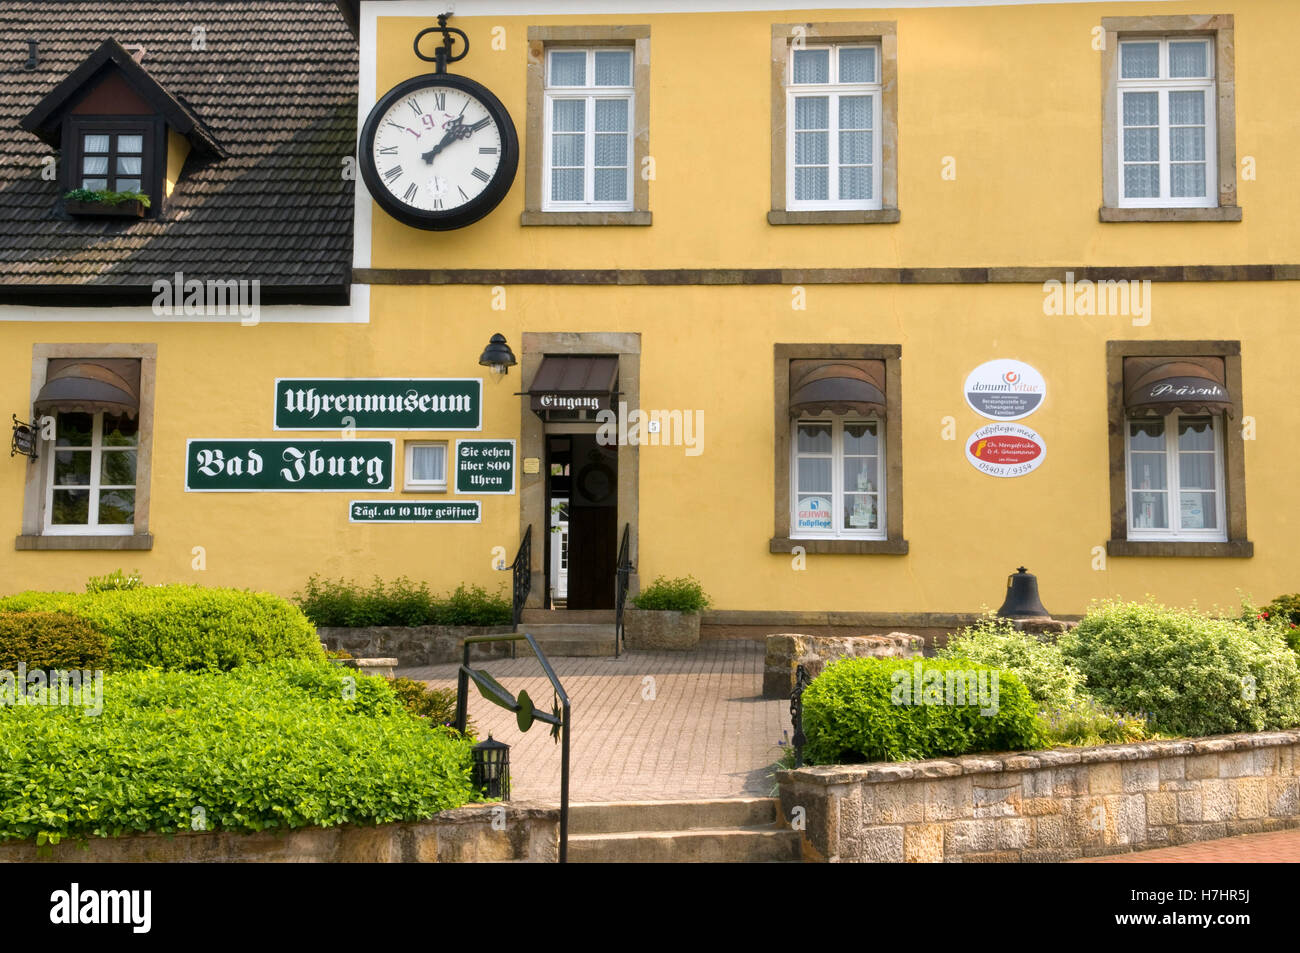 Uhrenmuseum clock museum and coffeehouse, Bad Iburg, Osnabruecker Land region, Lower Saxony Stock Photo